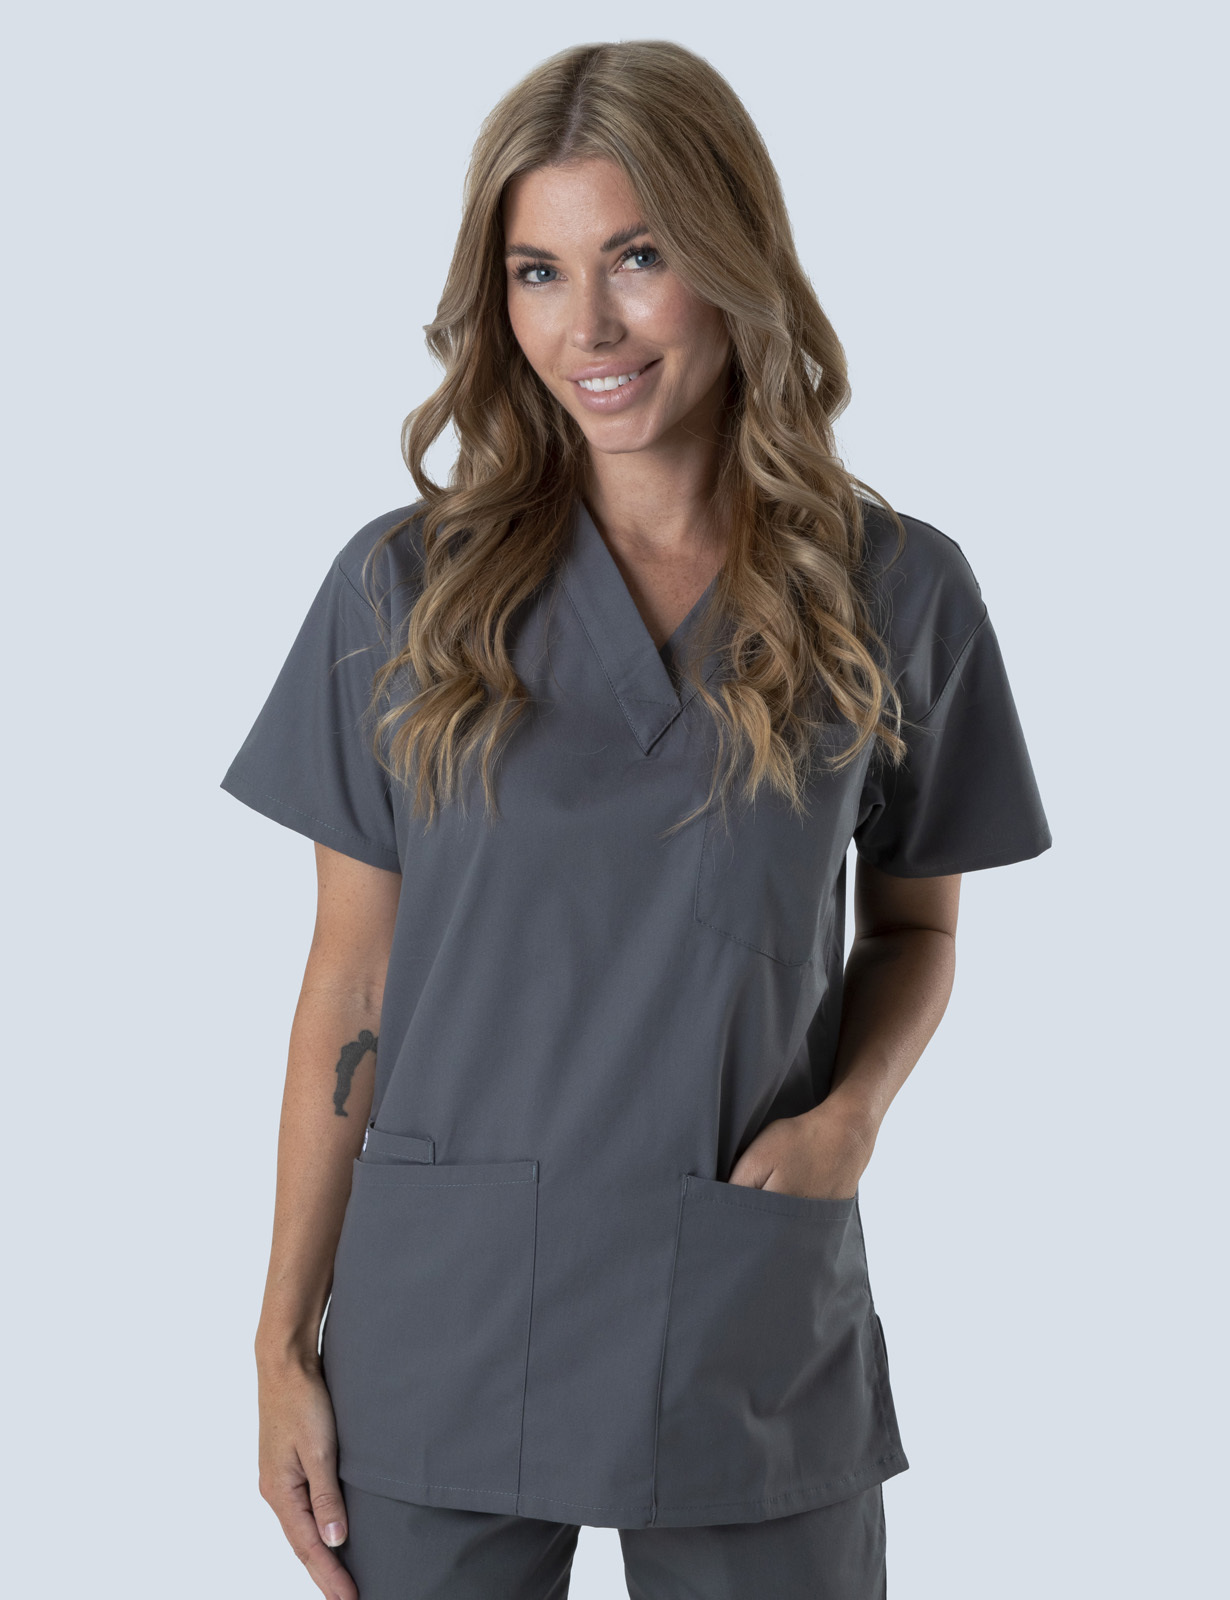 Queensland Children's Hospital Emergency Department Nurse Unit Manager Uniform Top Bundle  (4 Pocket Top  in Steel Grey incl Logos)